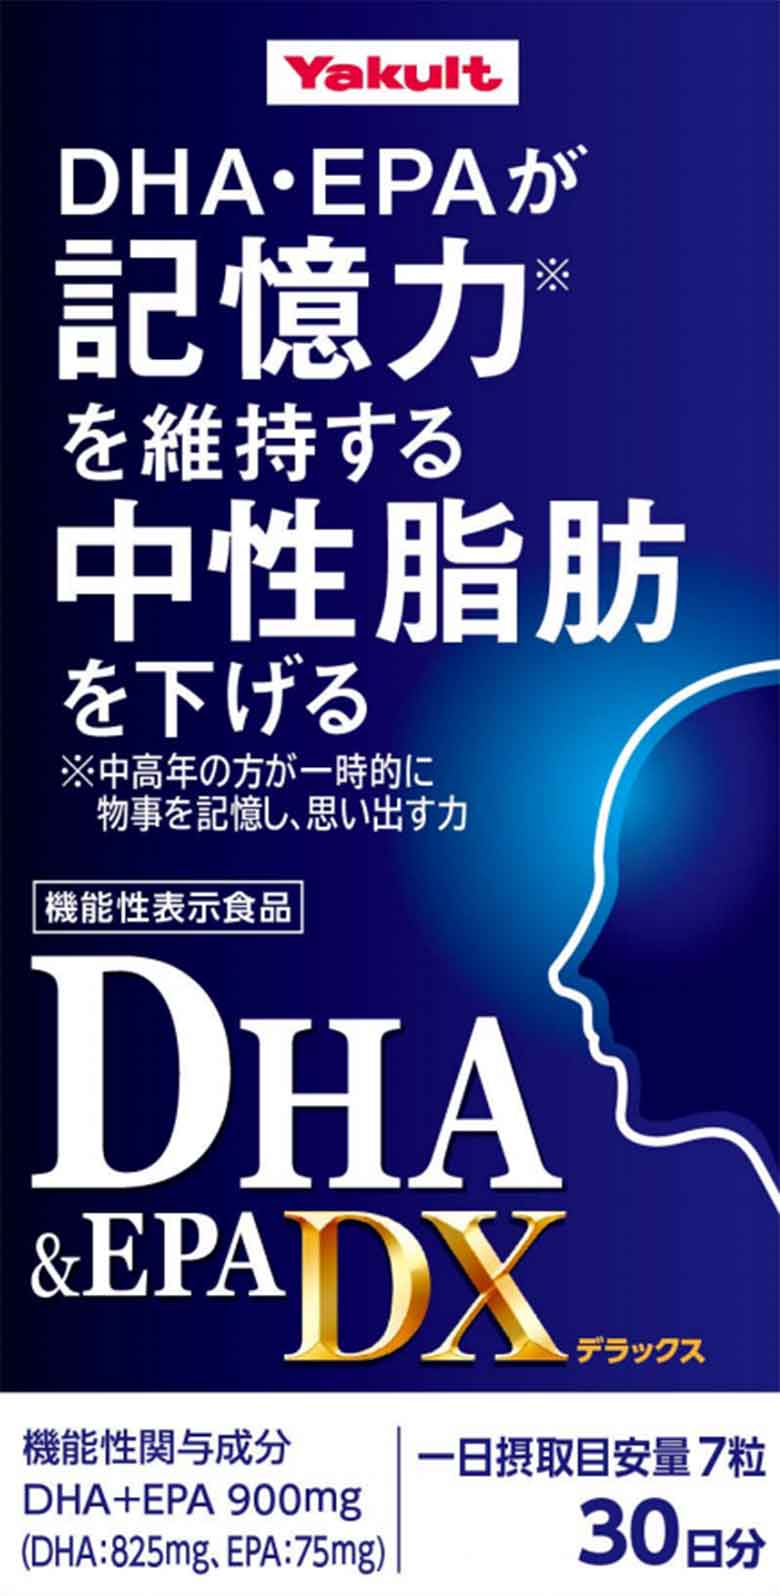 DHA&EPA DX(ディーエイチエー アンド イーピーエー デラックス)